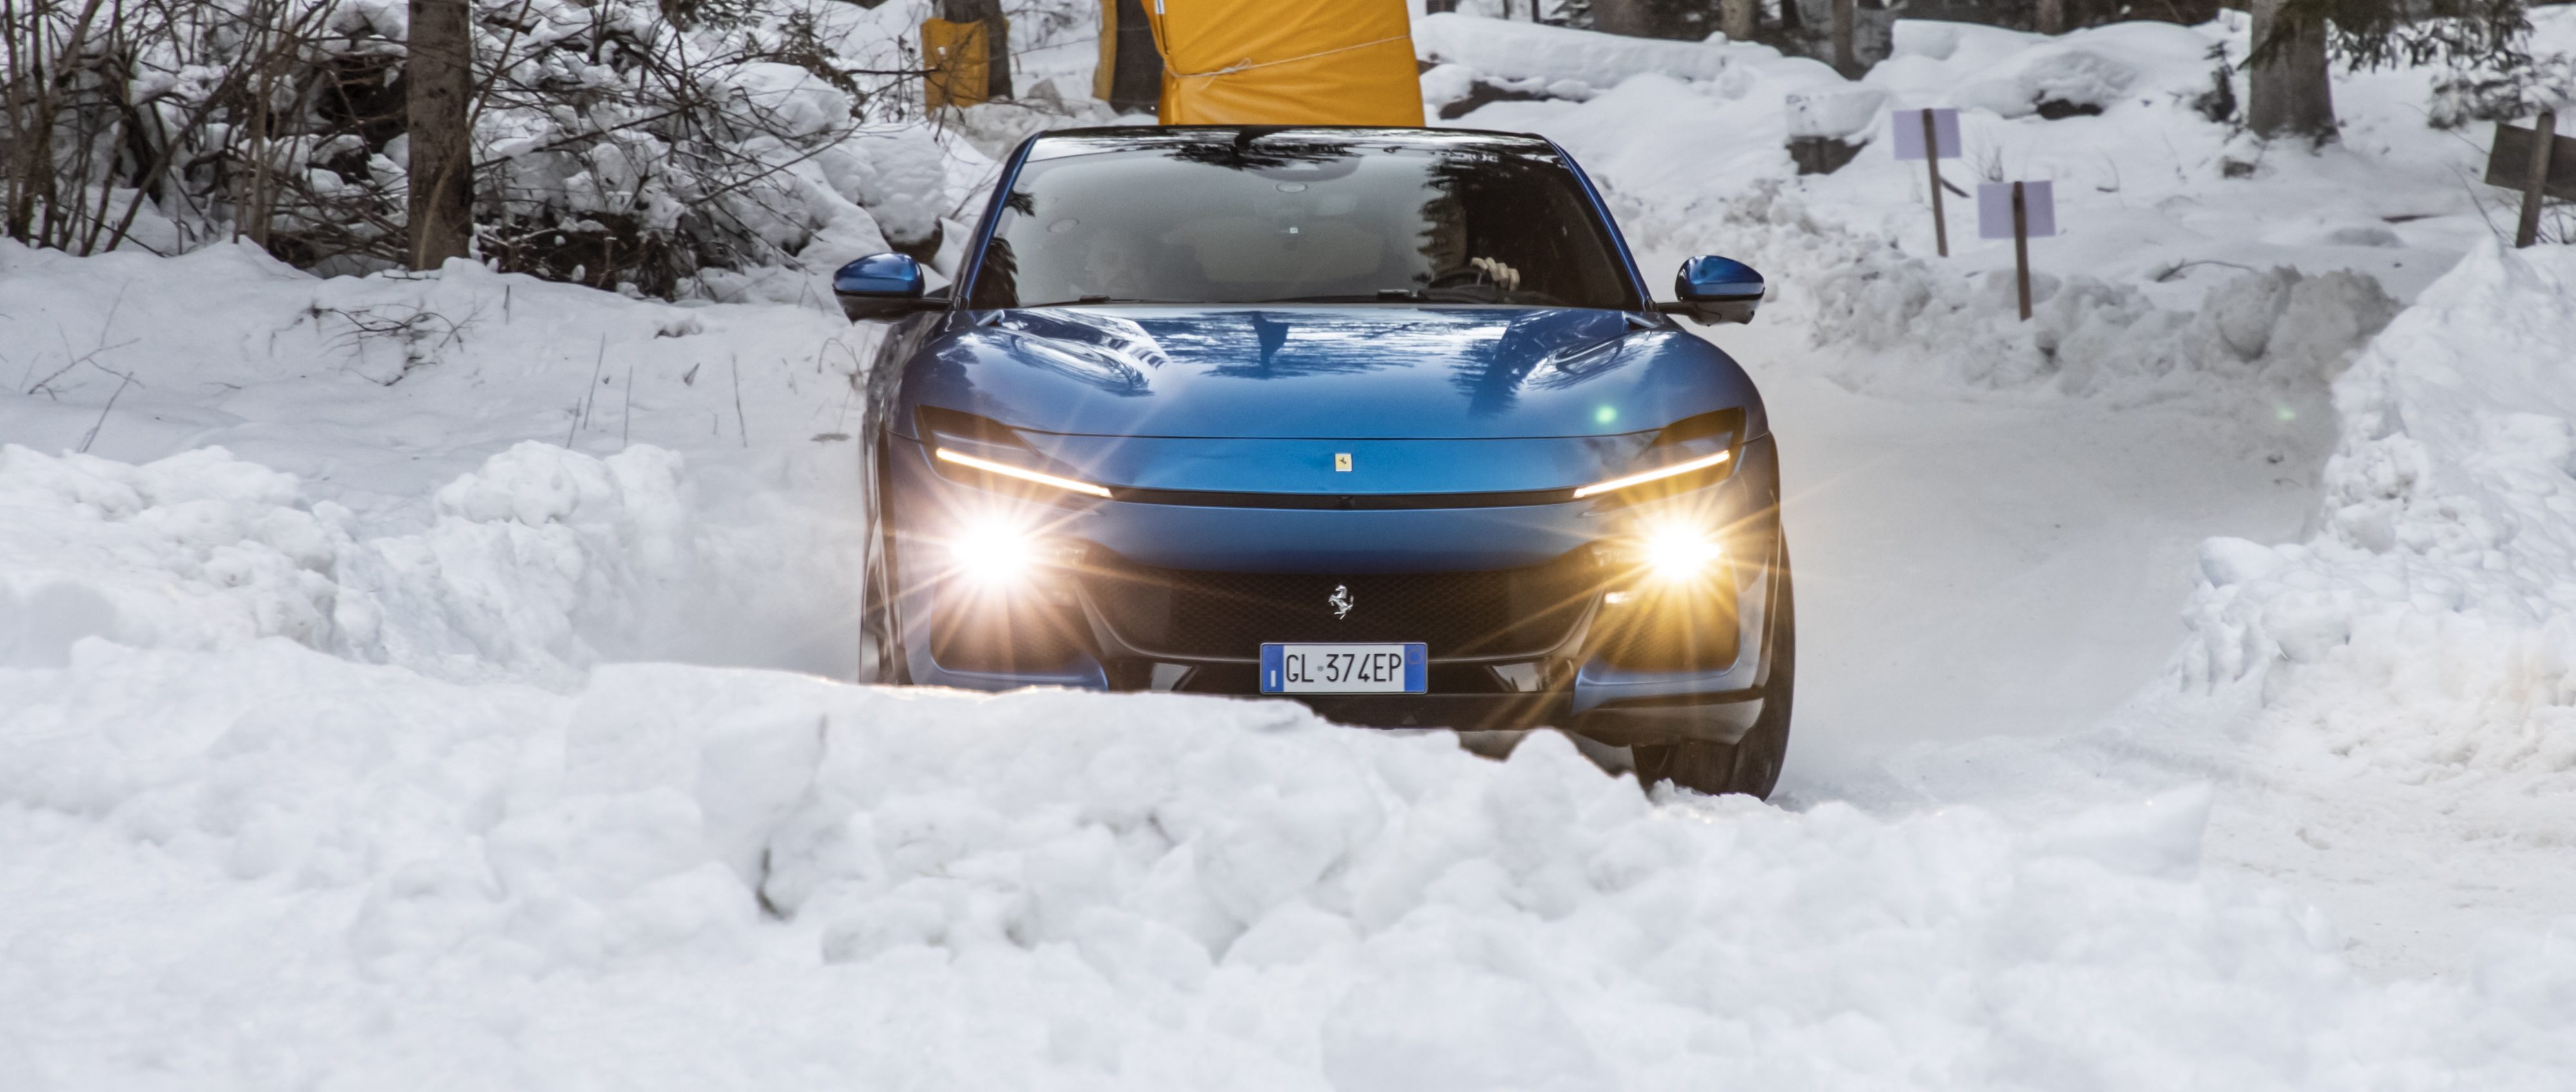 Will Dron drives the Ferrari Purosangue on snow, front